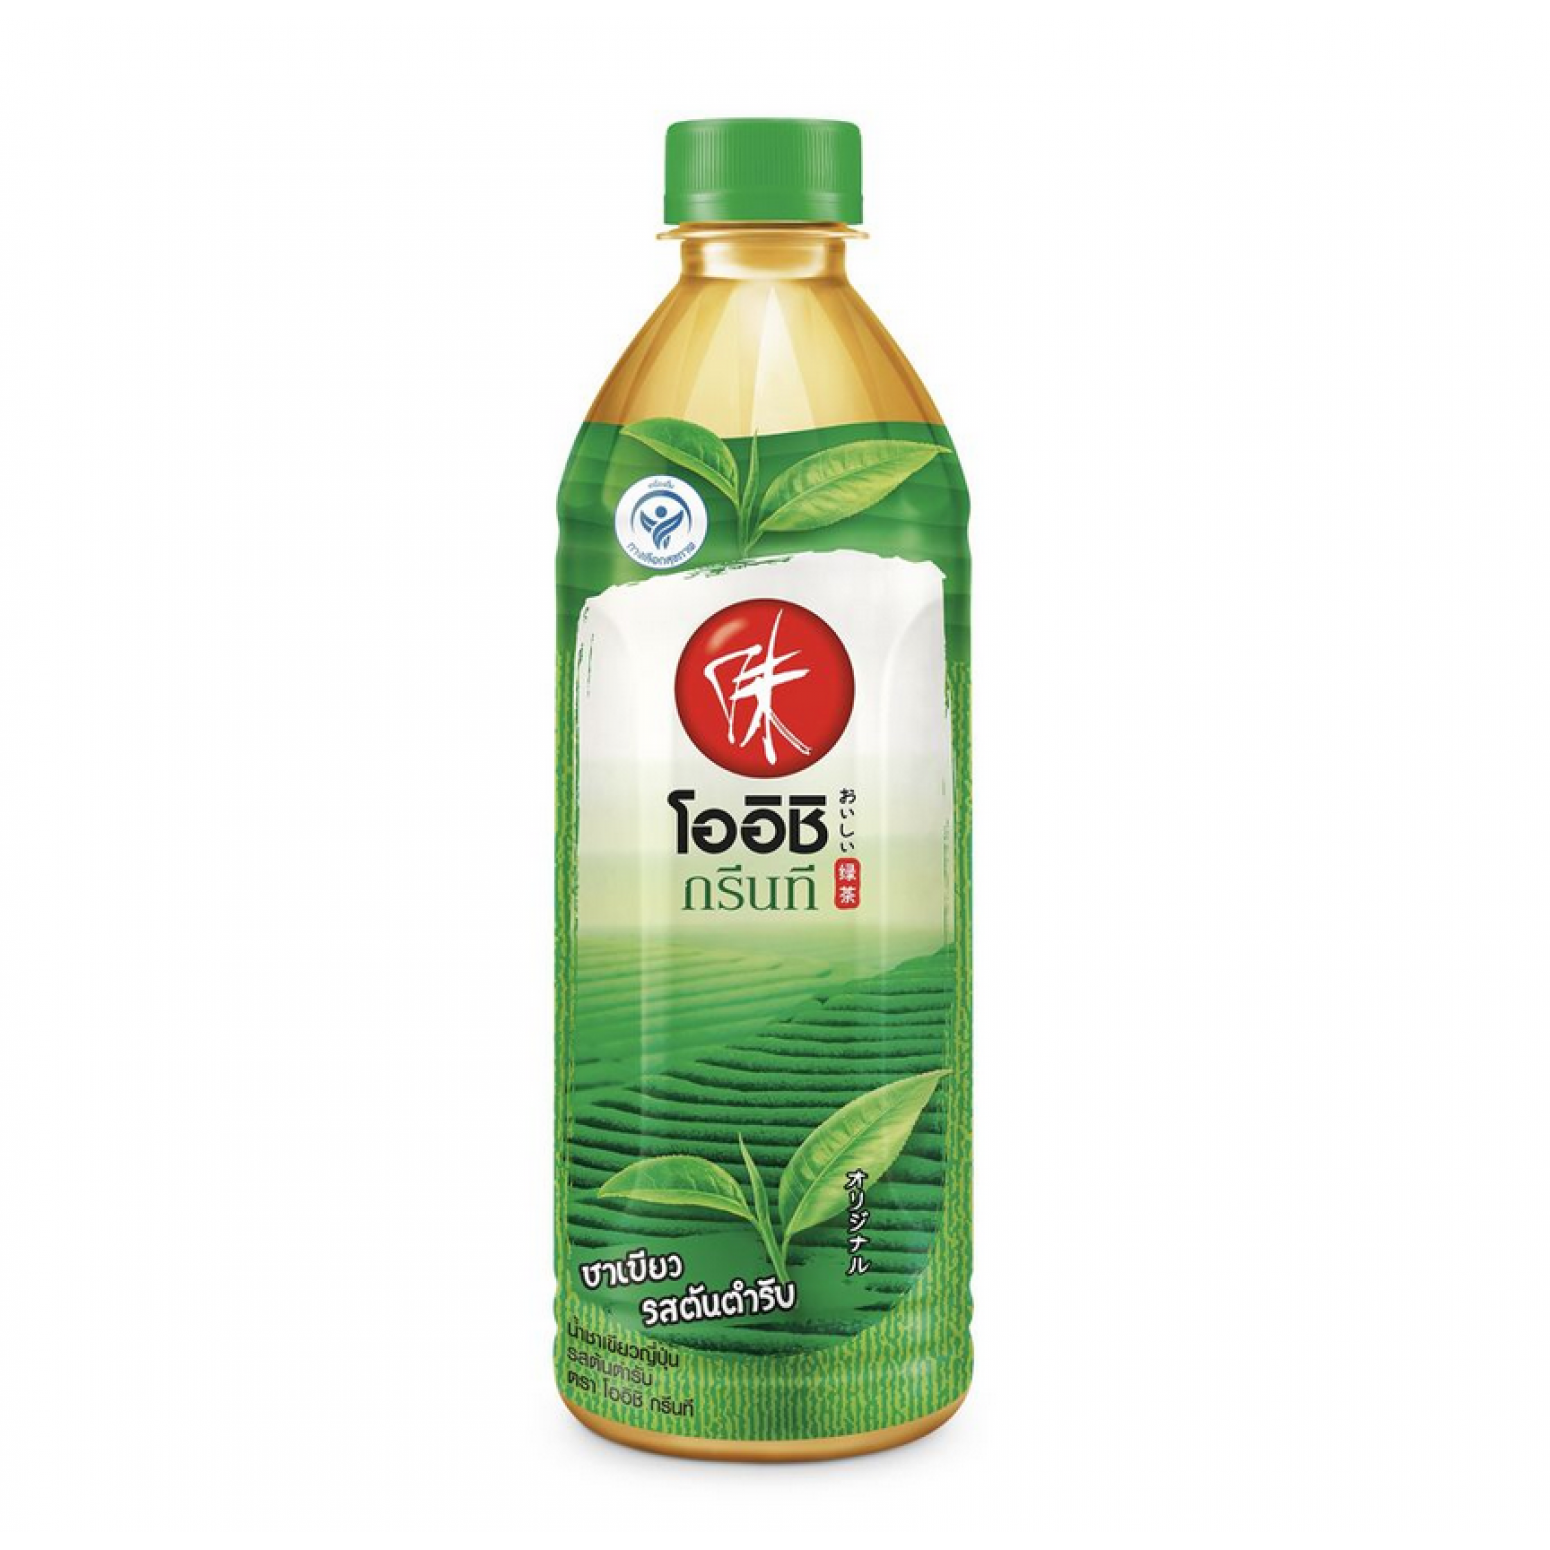 Oishi Green Tea Original 500ml.